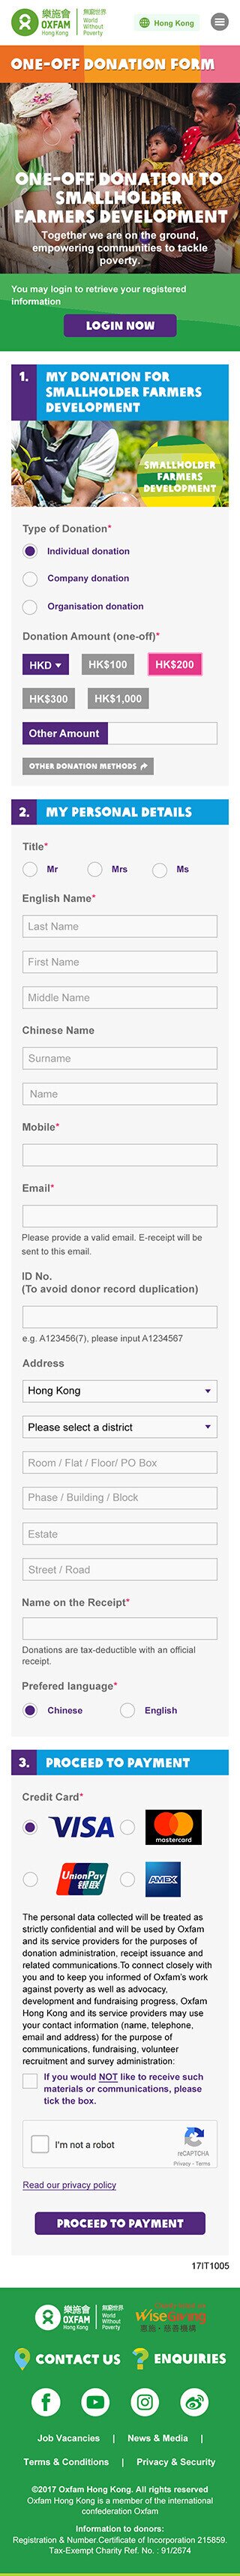 Oxfam Hong Kong website screenshot for mobile version 3 of 3